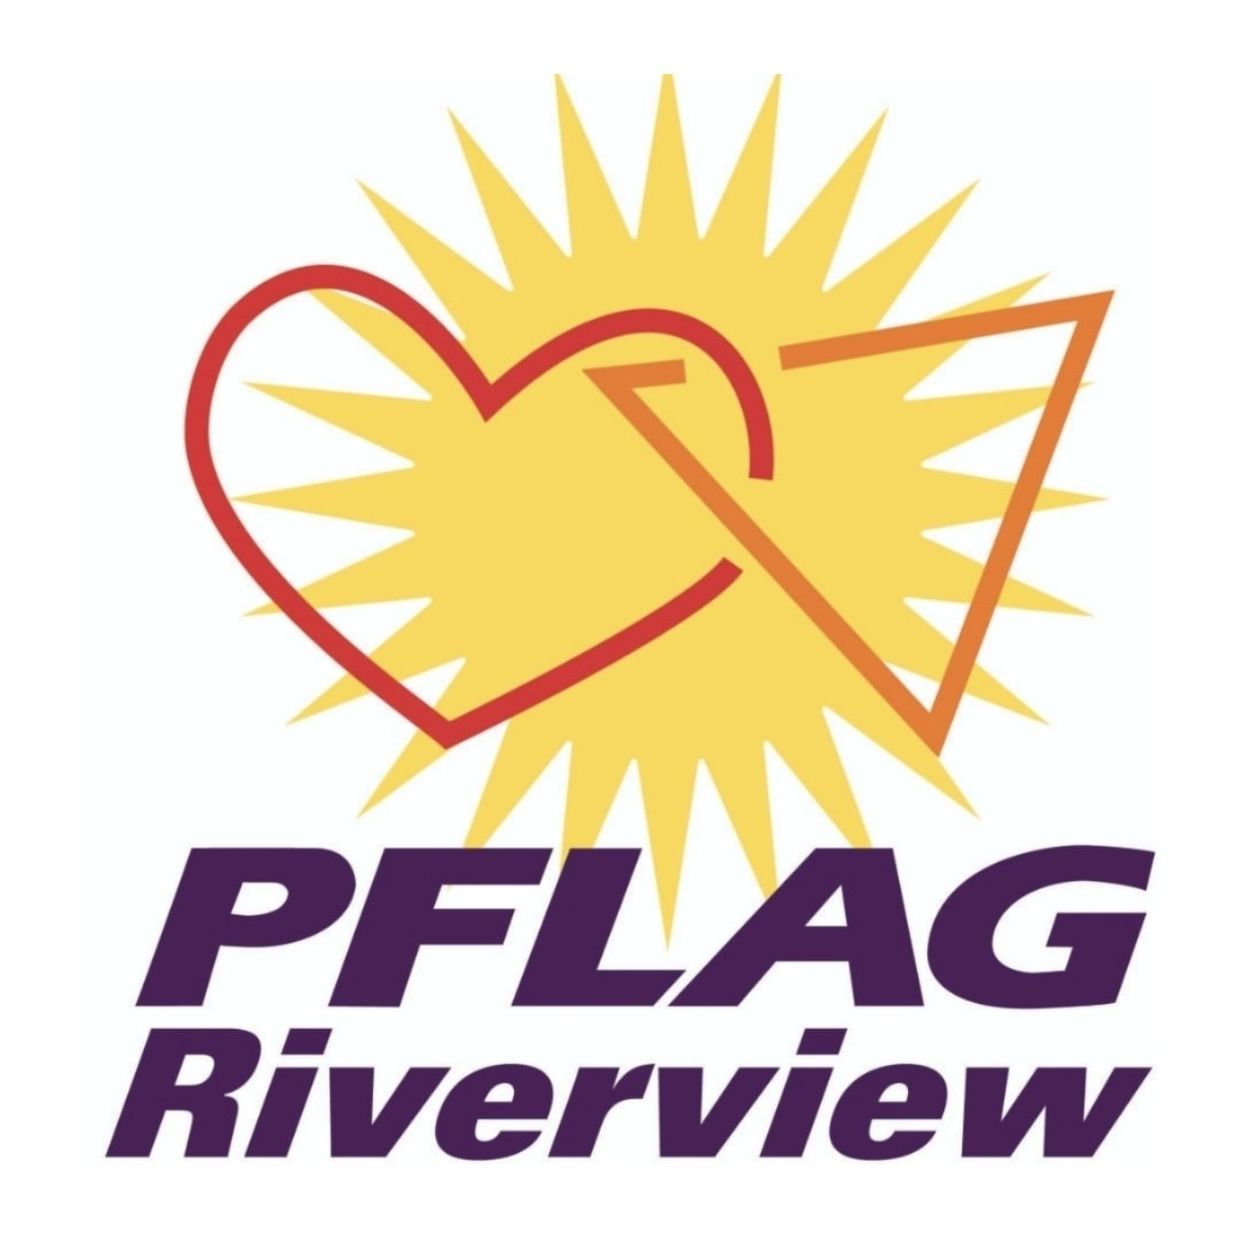 LGBTQ Organization in Miami Florida - PFLAG Riverview